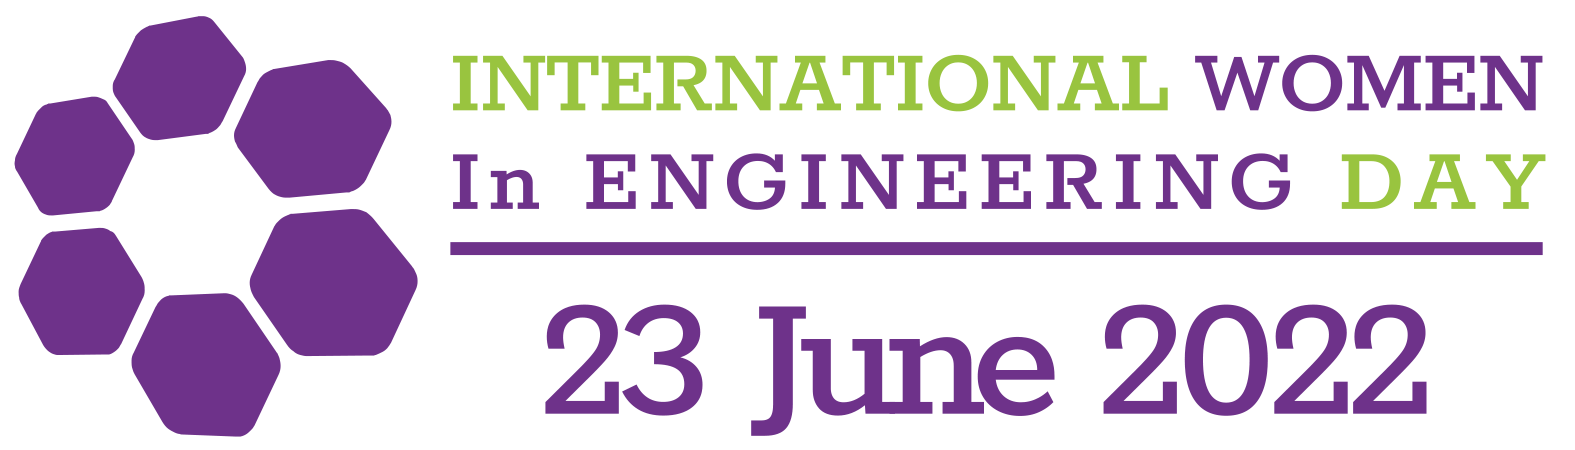 Celebrating International Women In Engineering Day